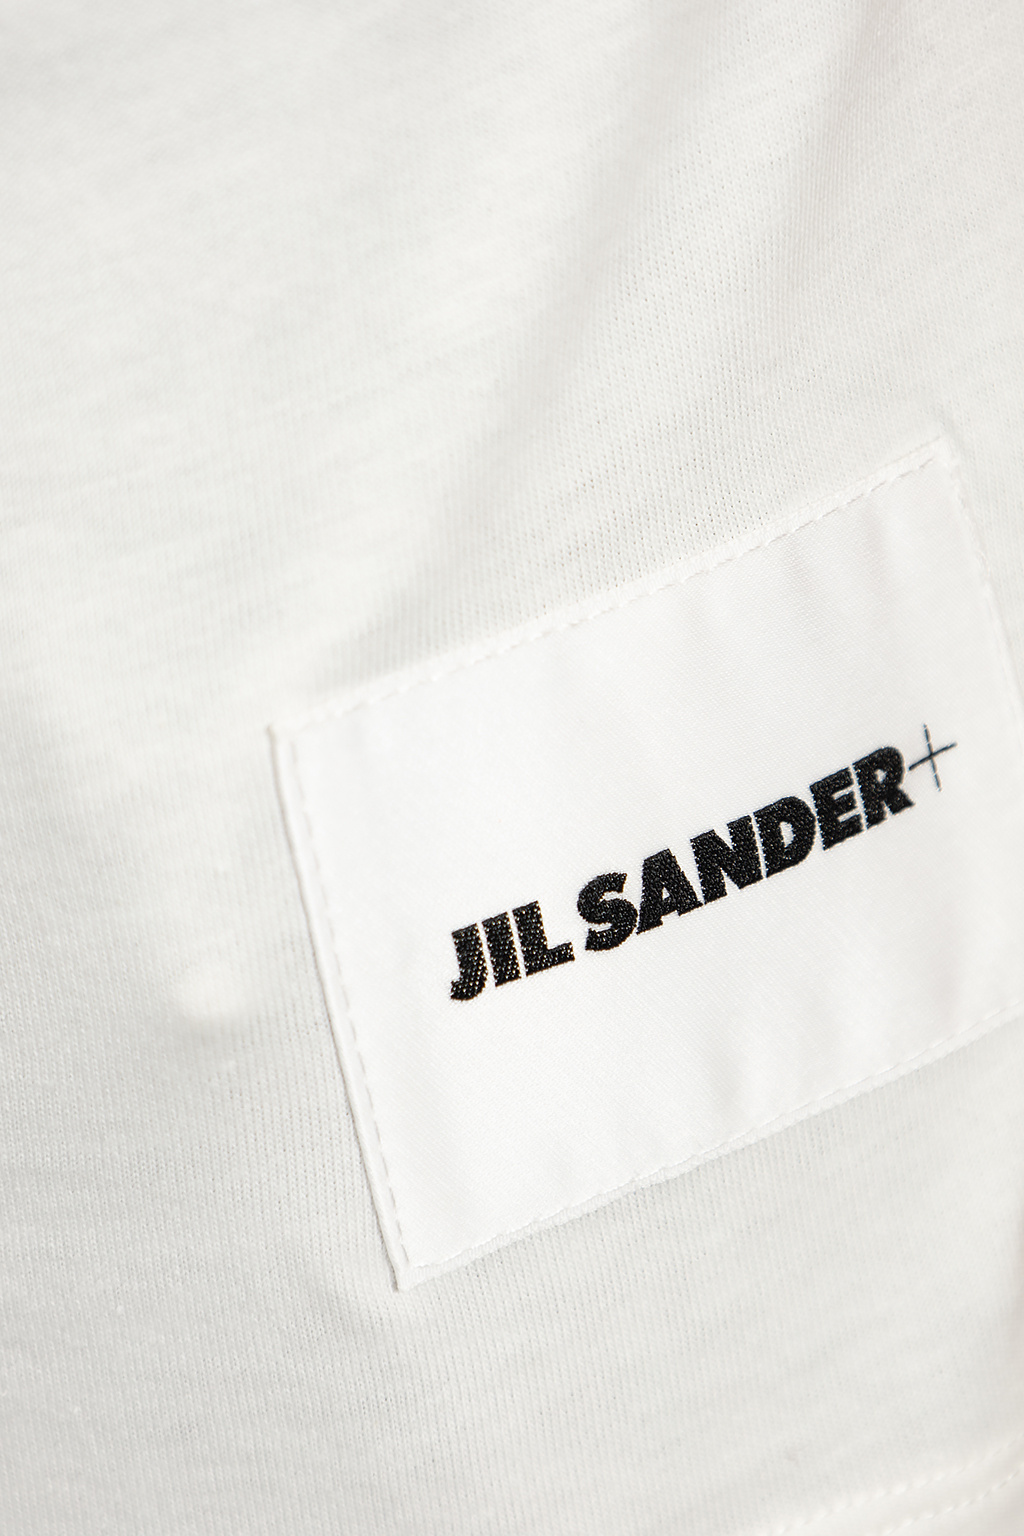 IetpShops GB - White T - shirt three - Jil Sander whipstitch slip